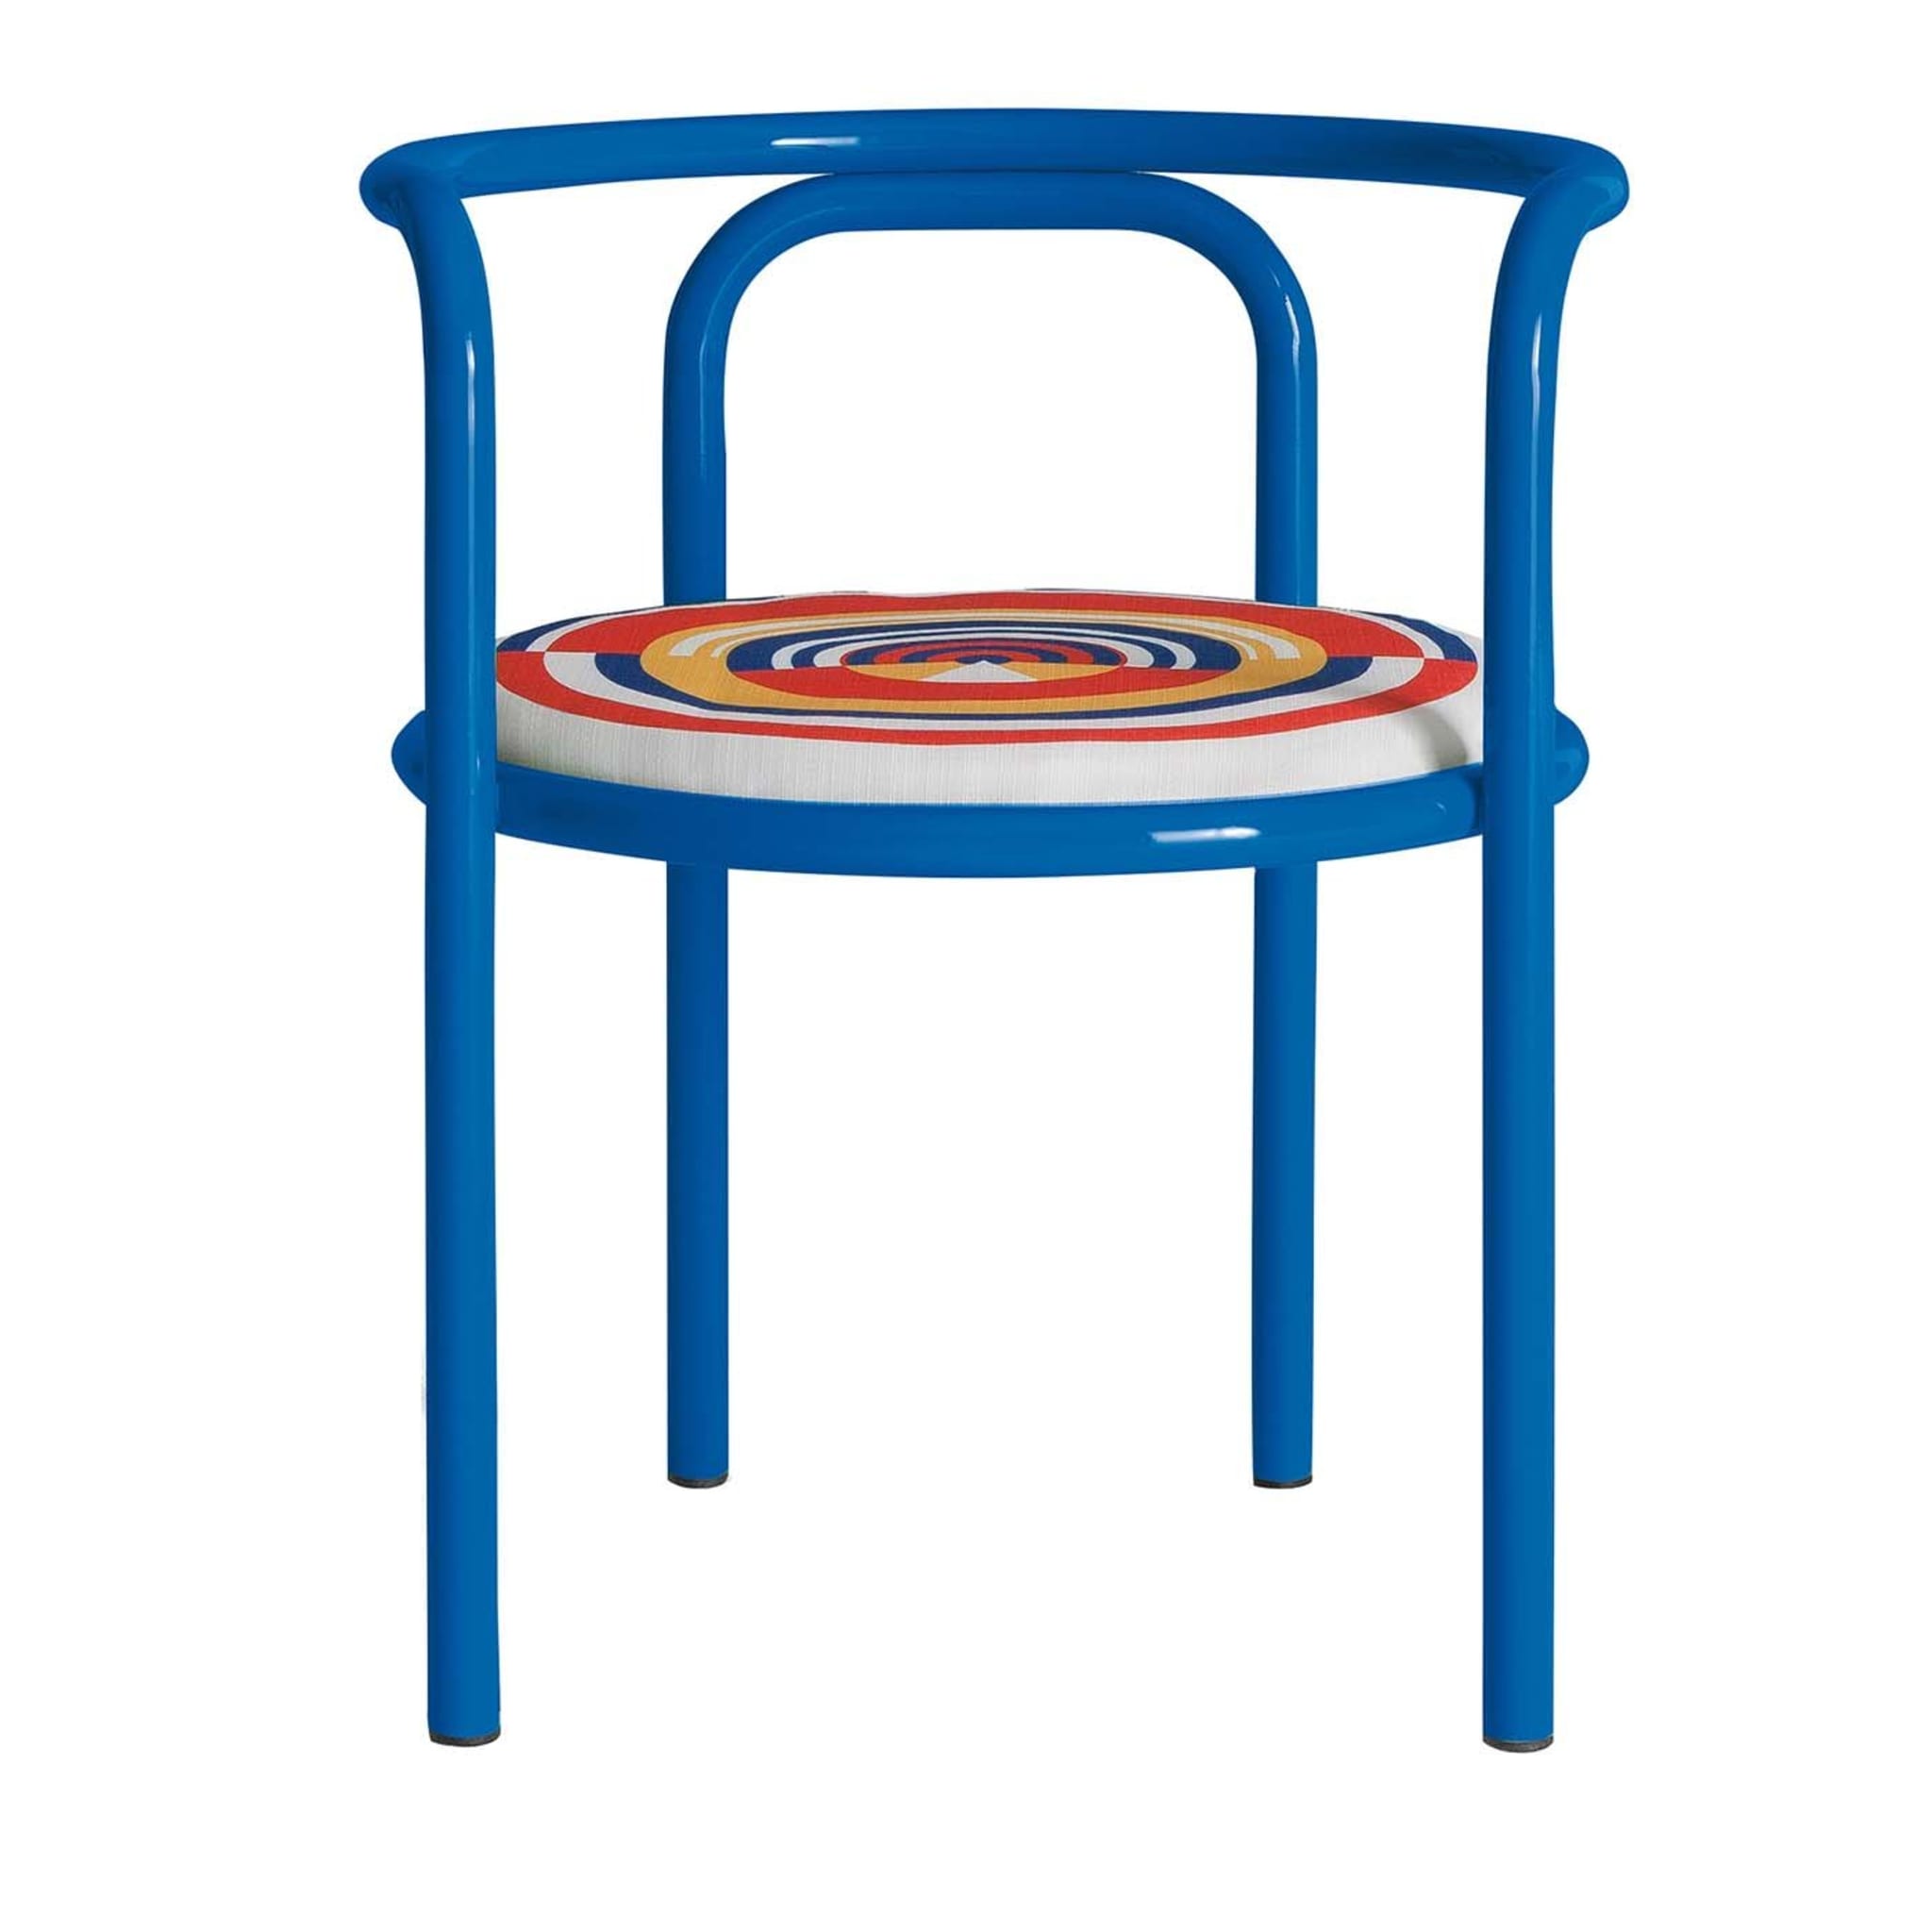 Locus Solus Blauer Stuhl by Gae Aulenti - Hauptansicht